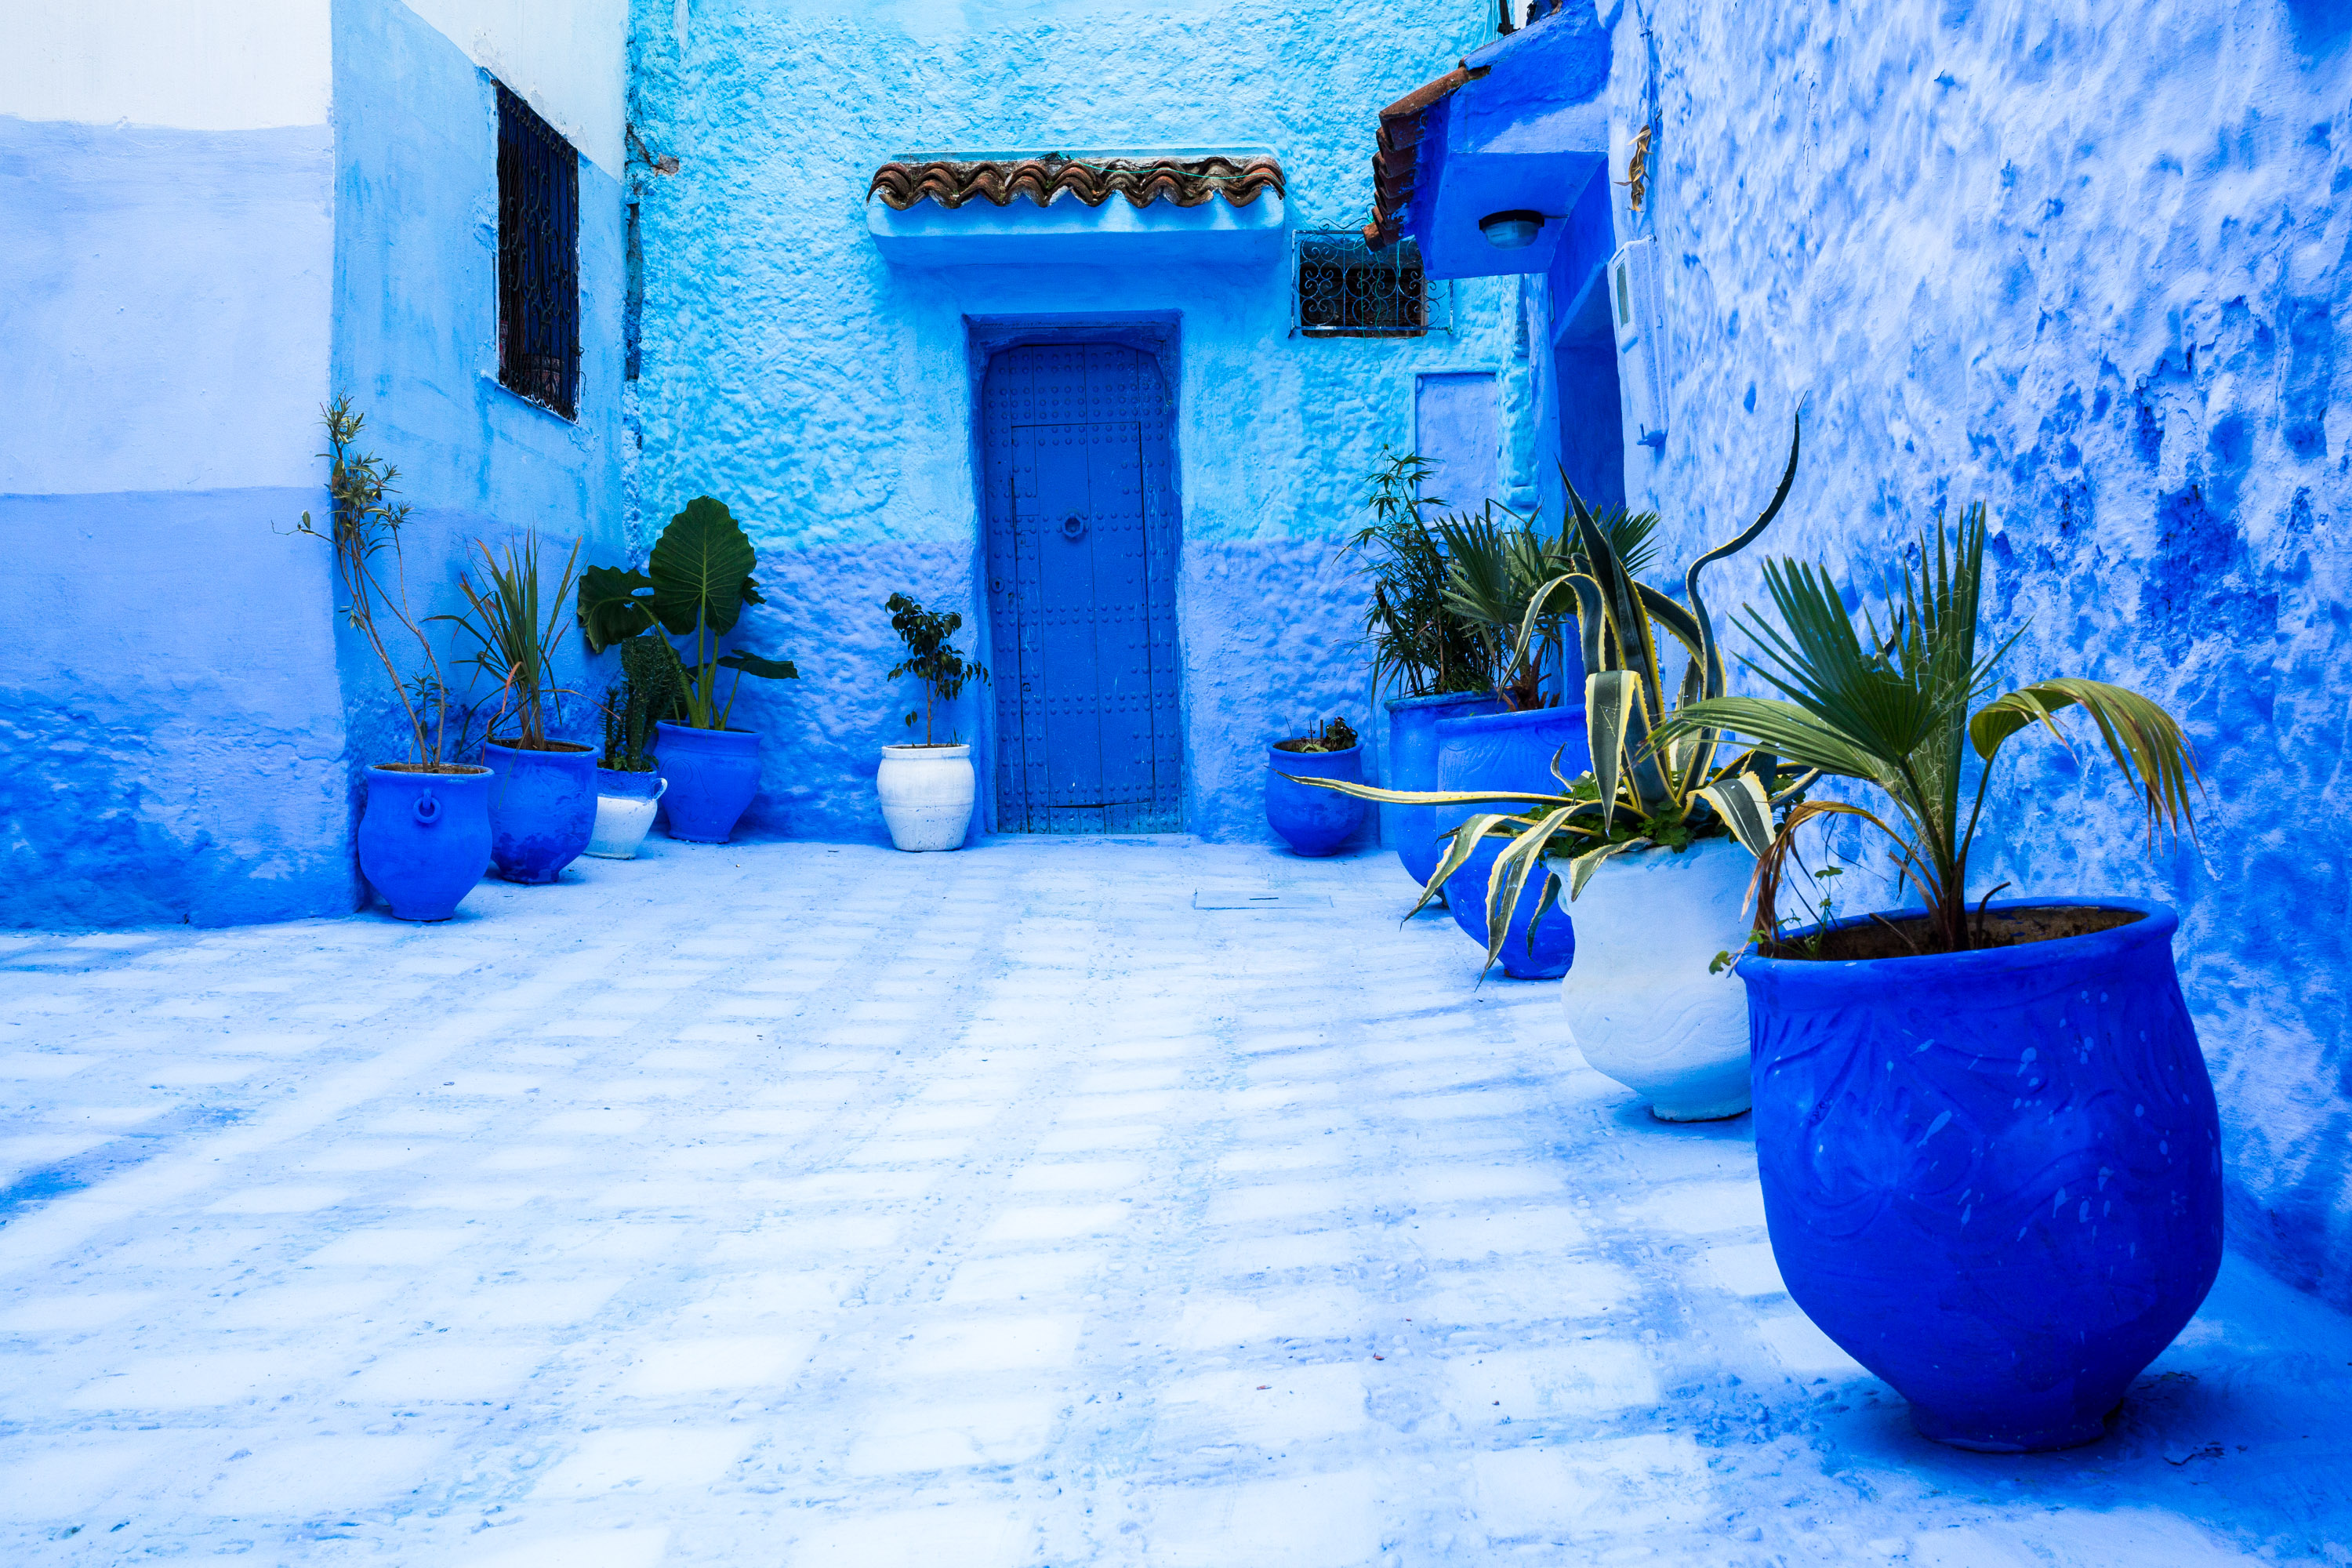 Chefchaouen – Moroccos blue city